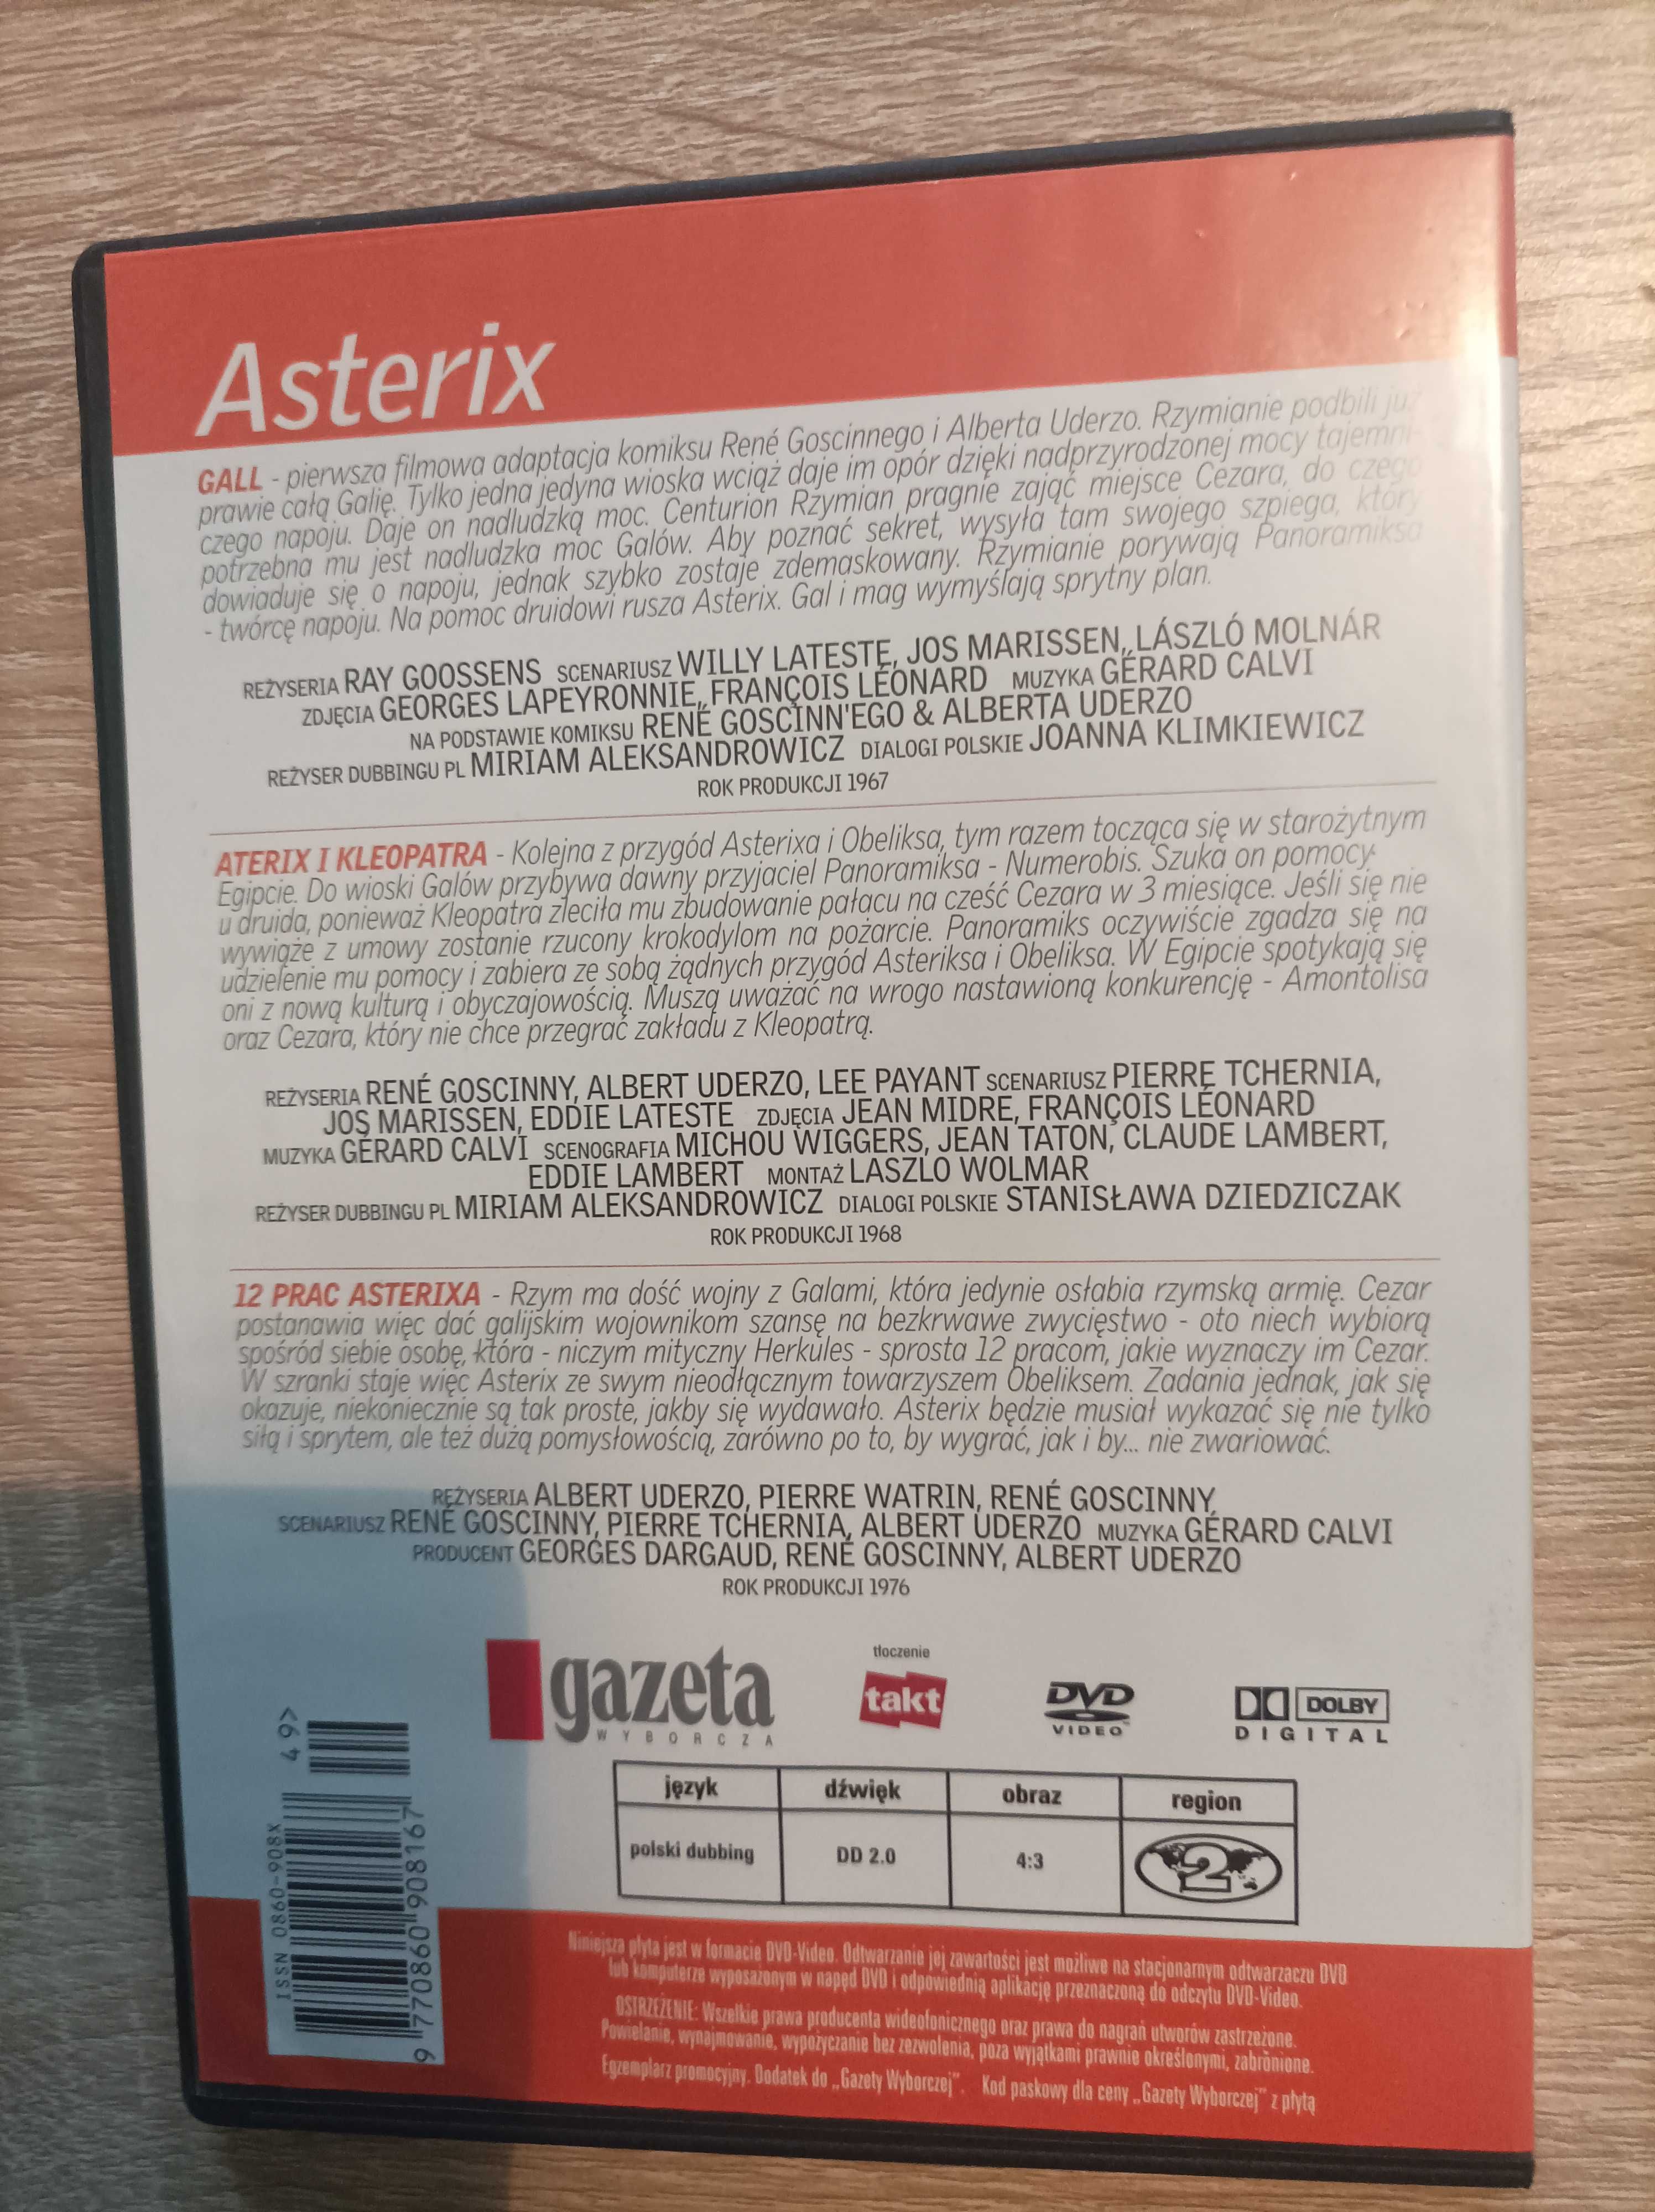 Film DVD Asterix